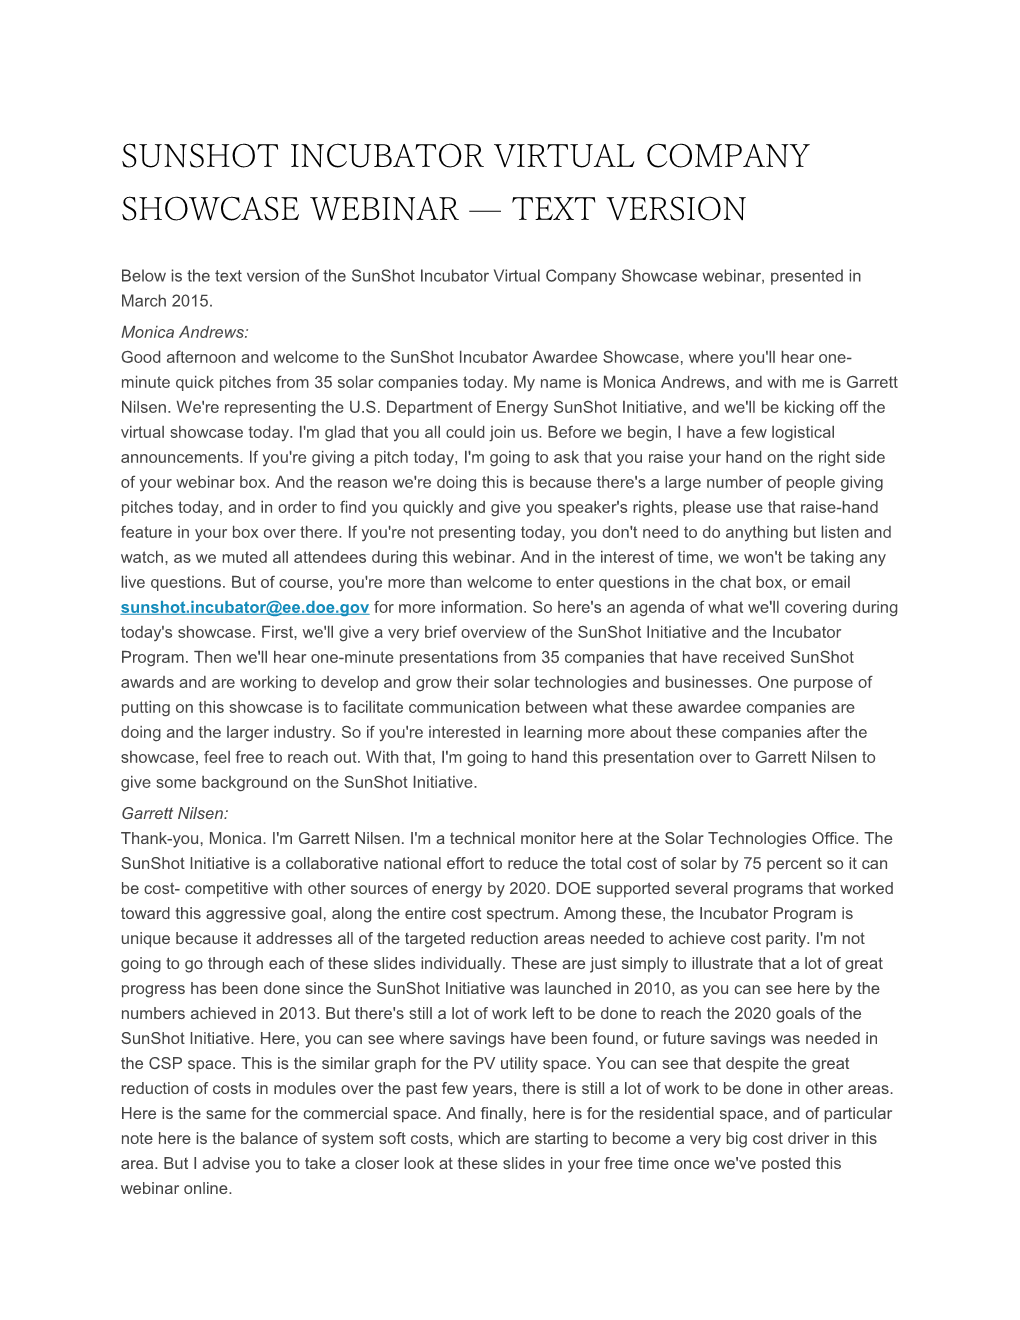 Sunshot Incubator Virtual Company Showcase Webinar Text Version